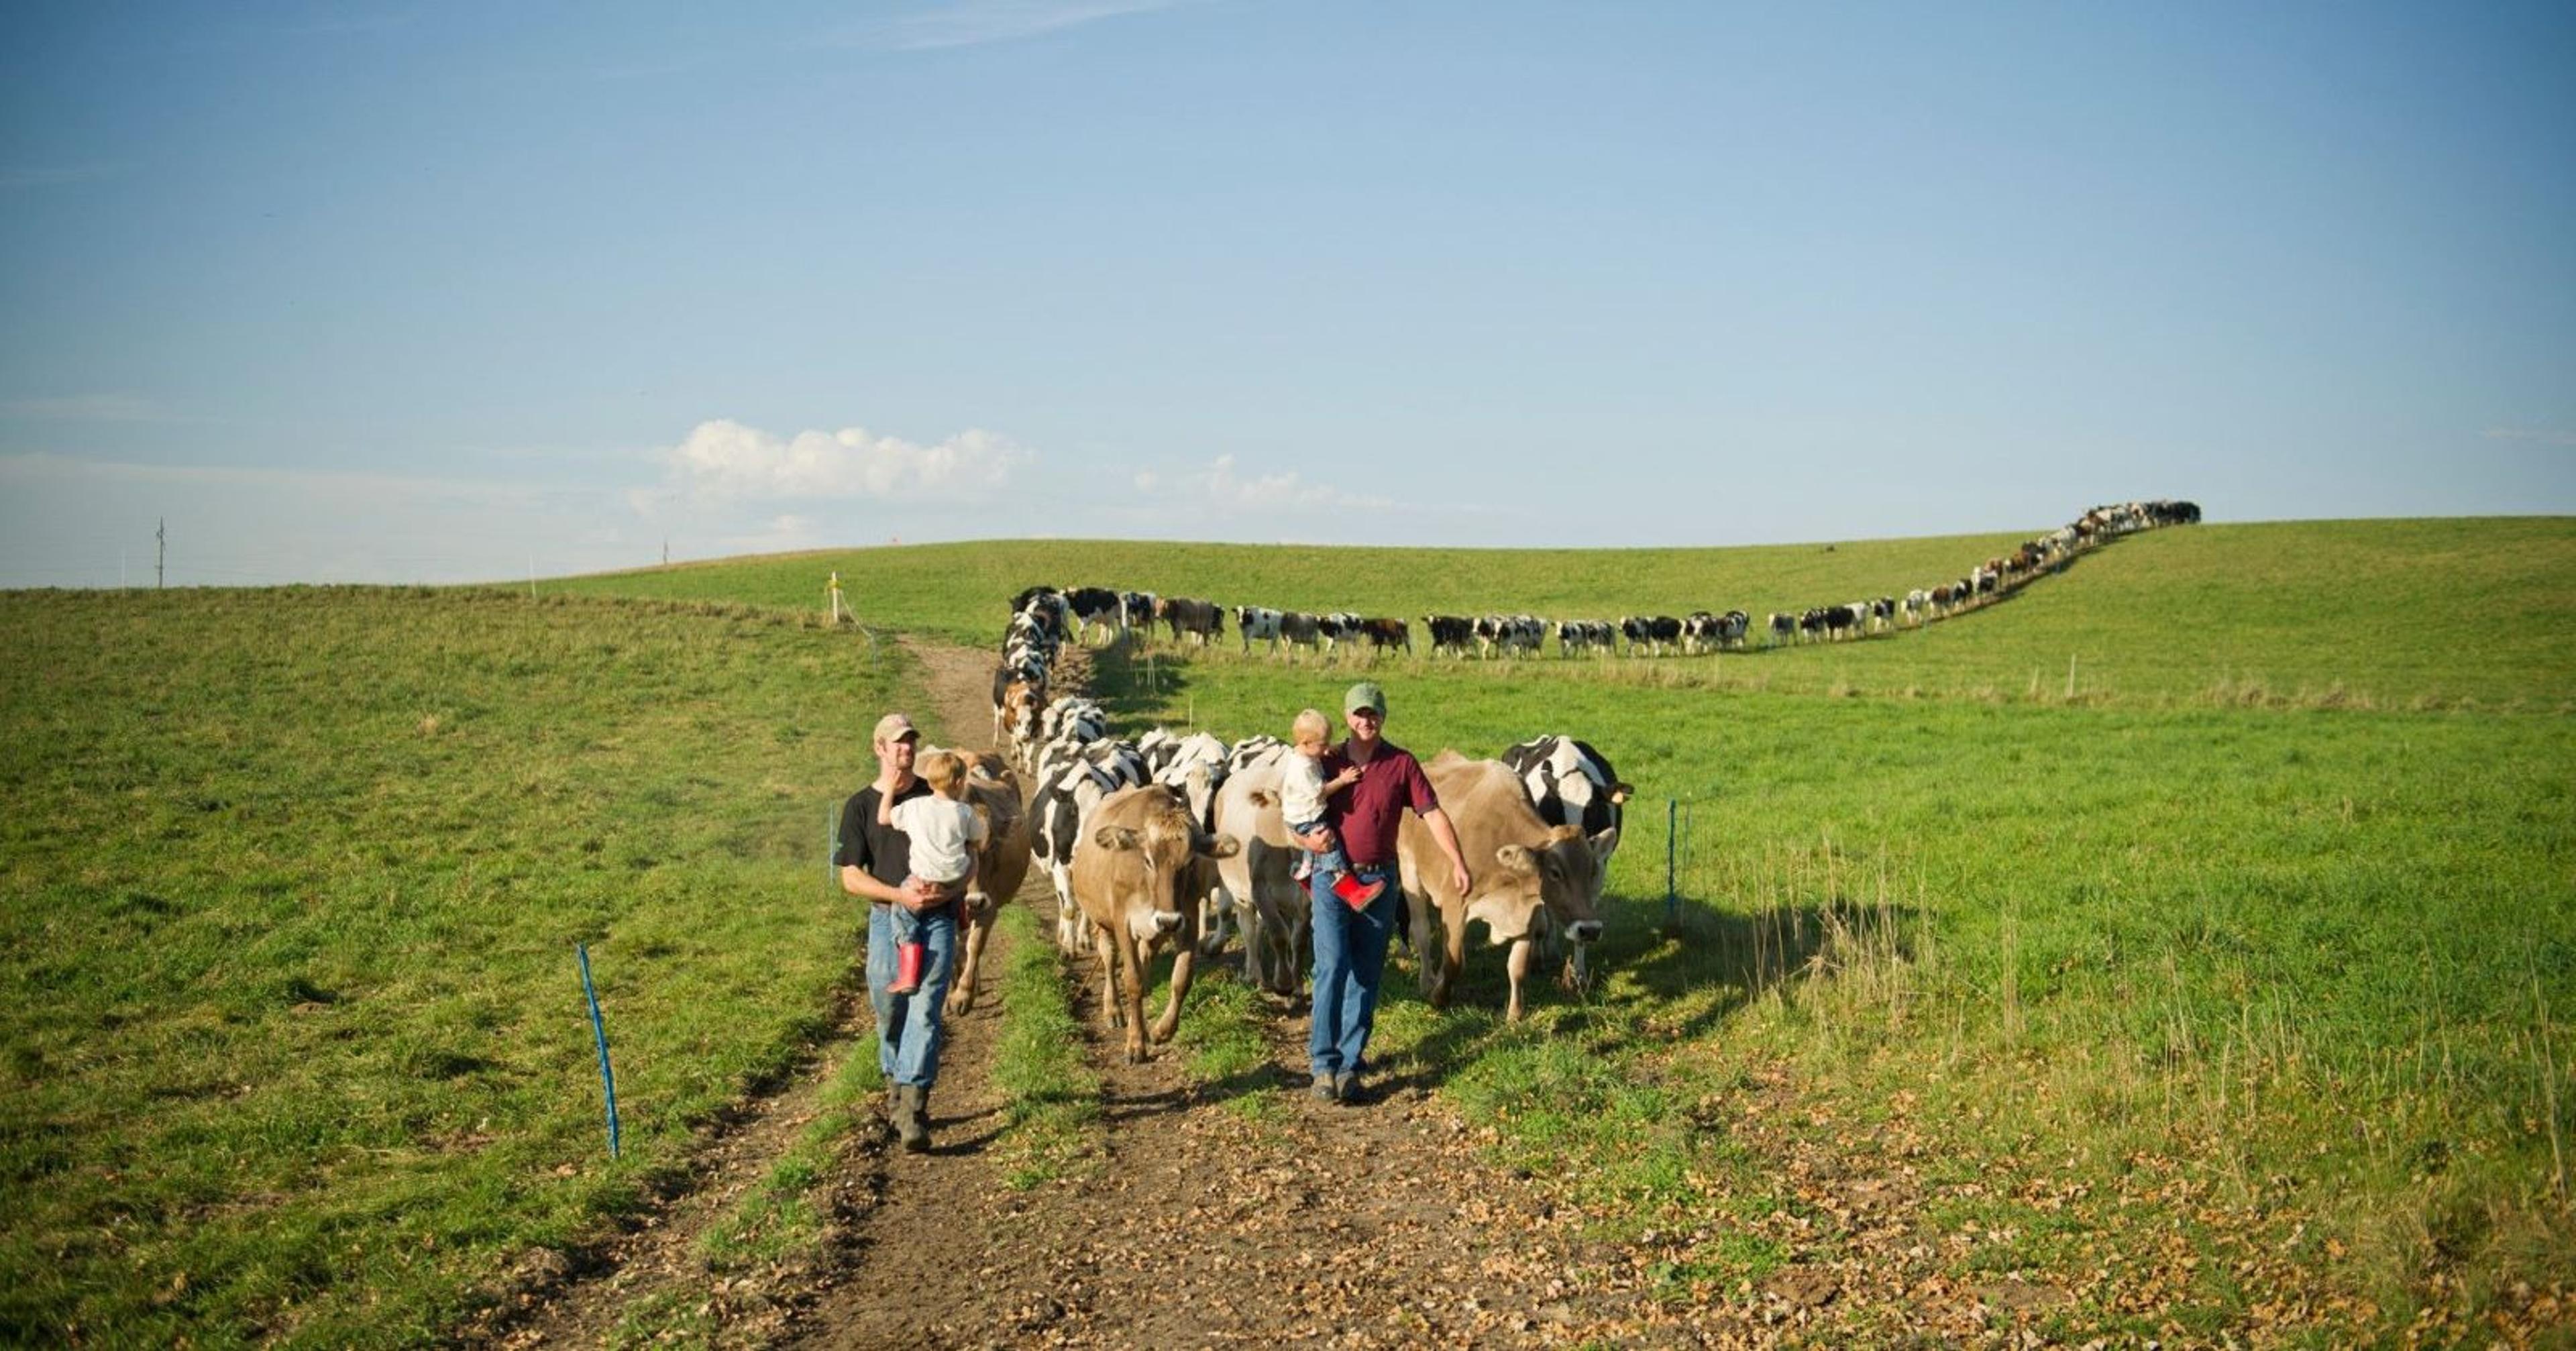 The Zwebers follow the cows back to the barn on their Minnesota farm.